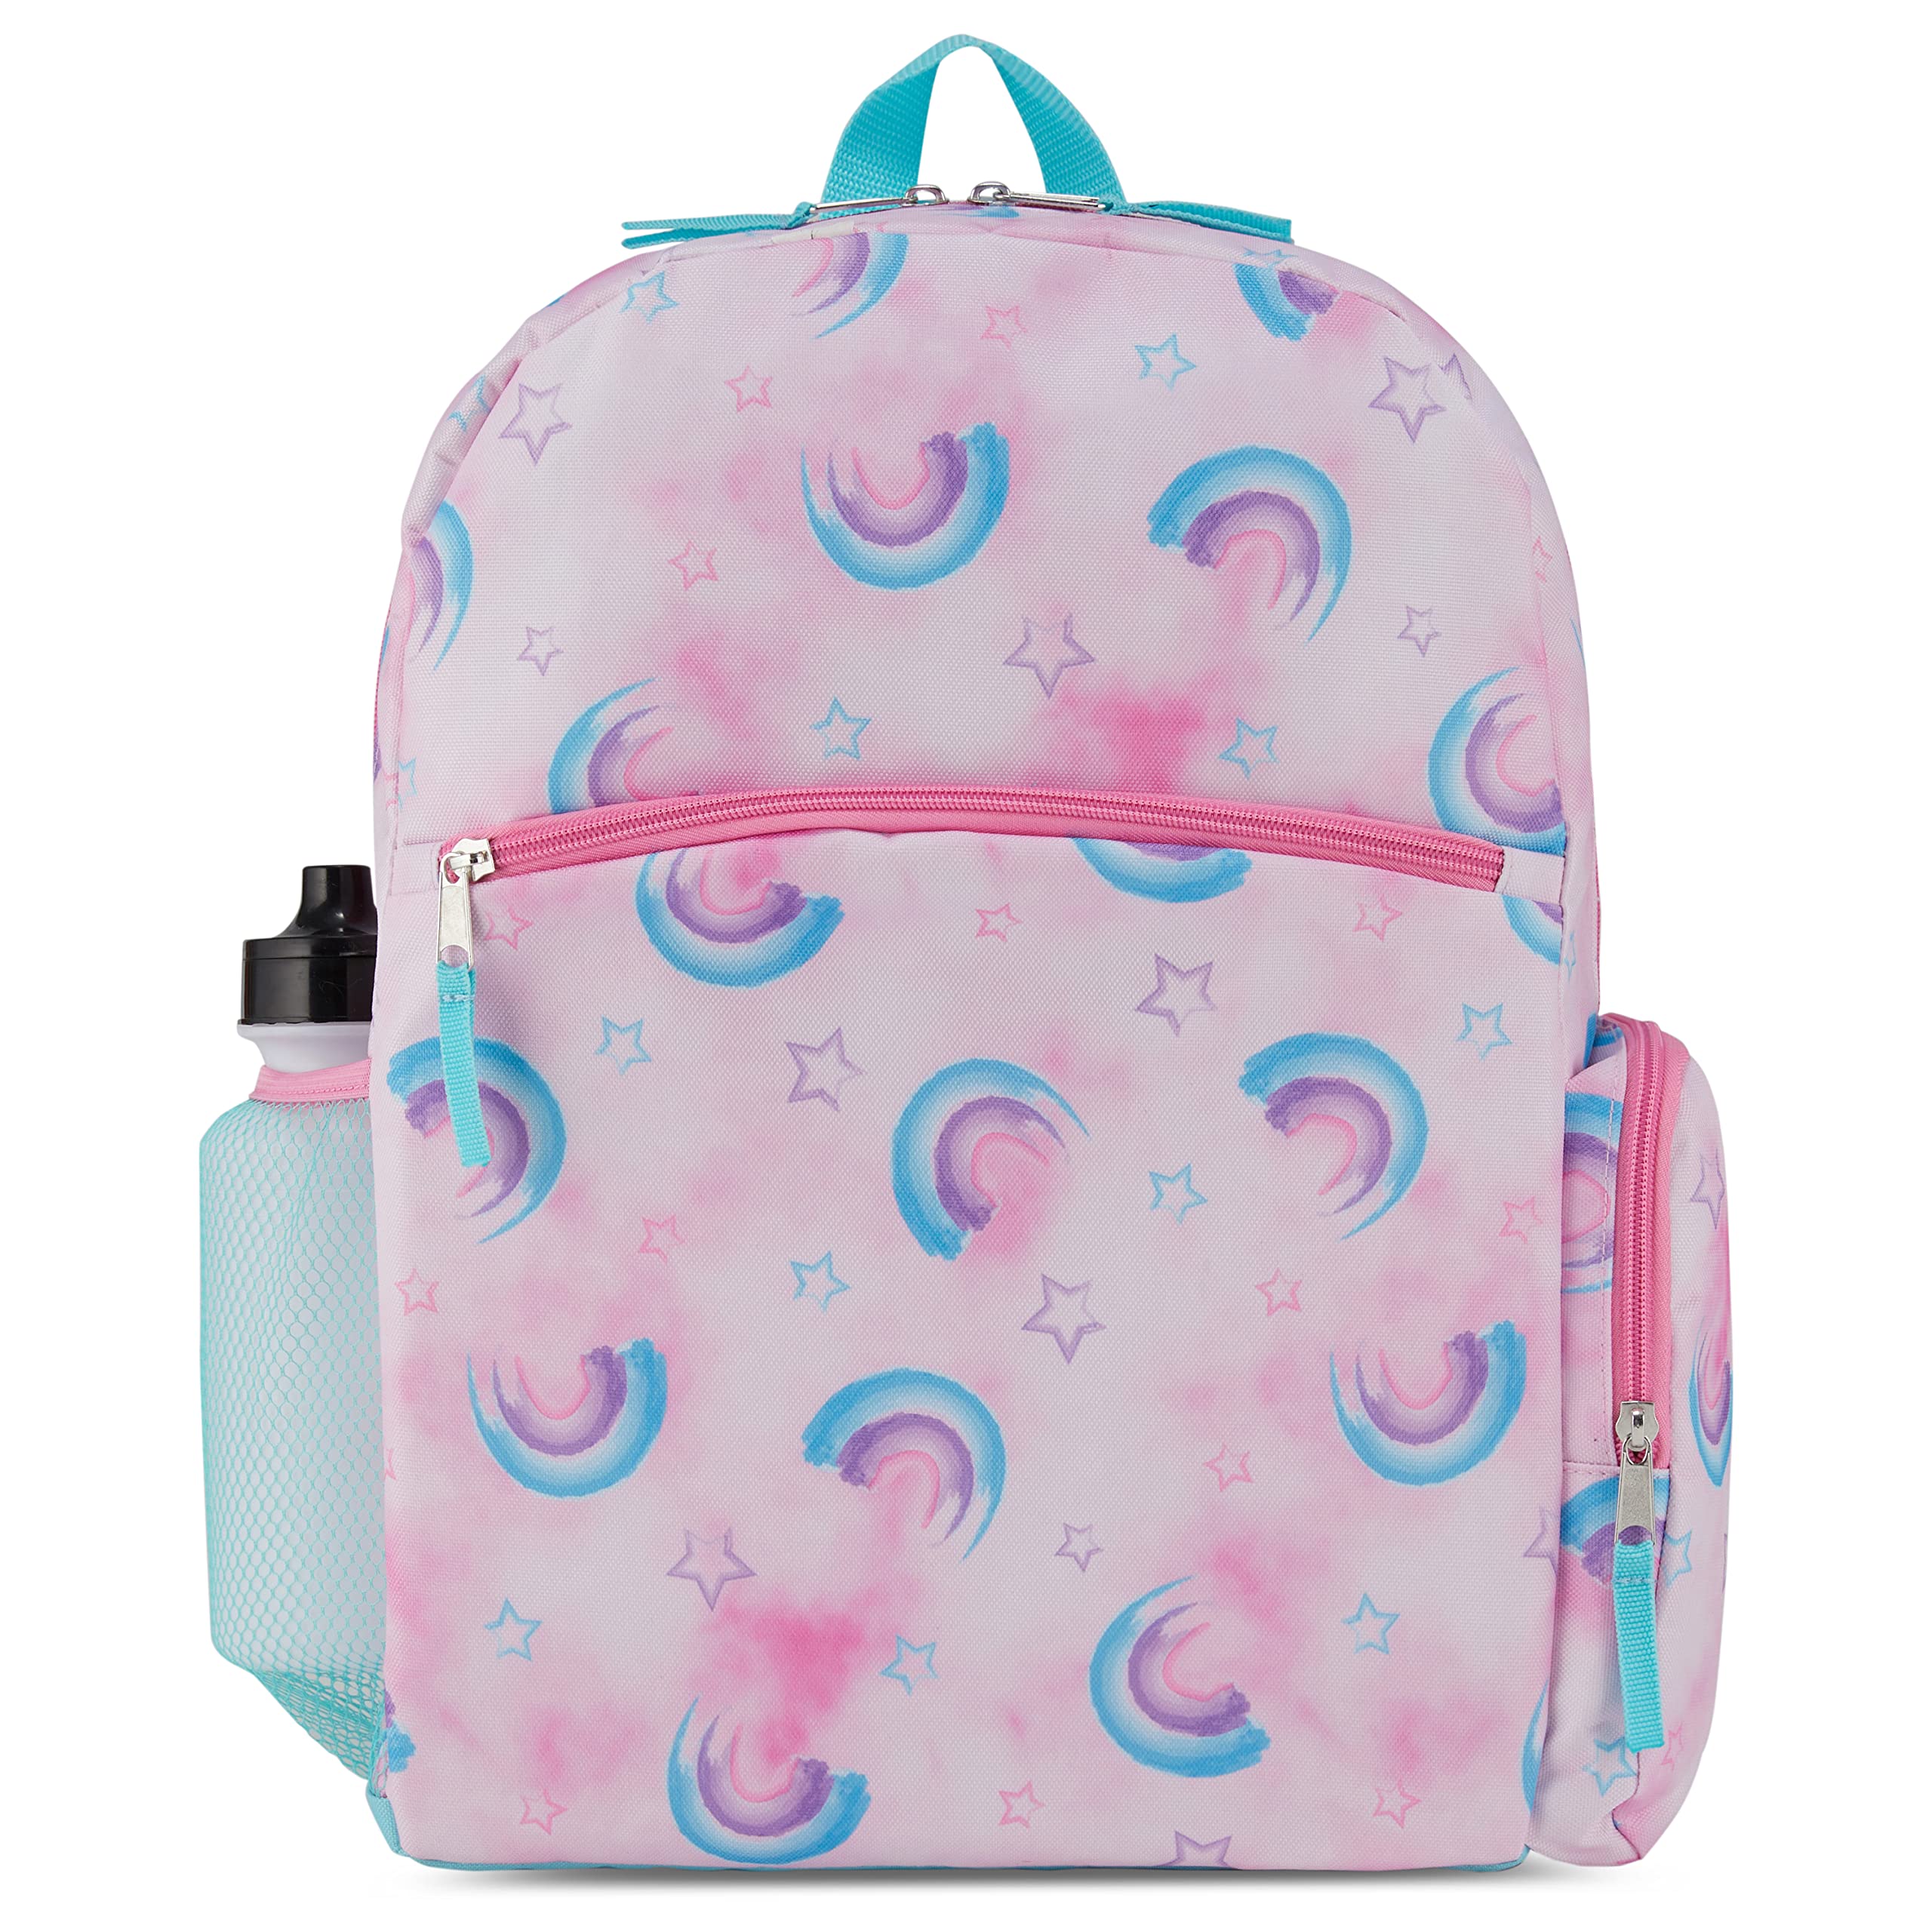 Cudlie Kindergarten Backpack w/Water Bottle & Stickers - Lightweight Girls Backpack for School/Travel - Kids Back Pack/Book Bag - Rainbow/Pink